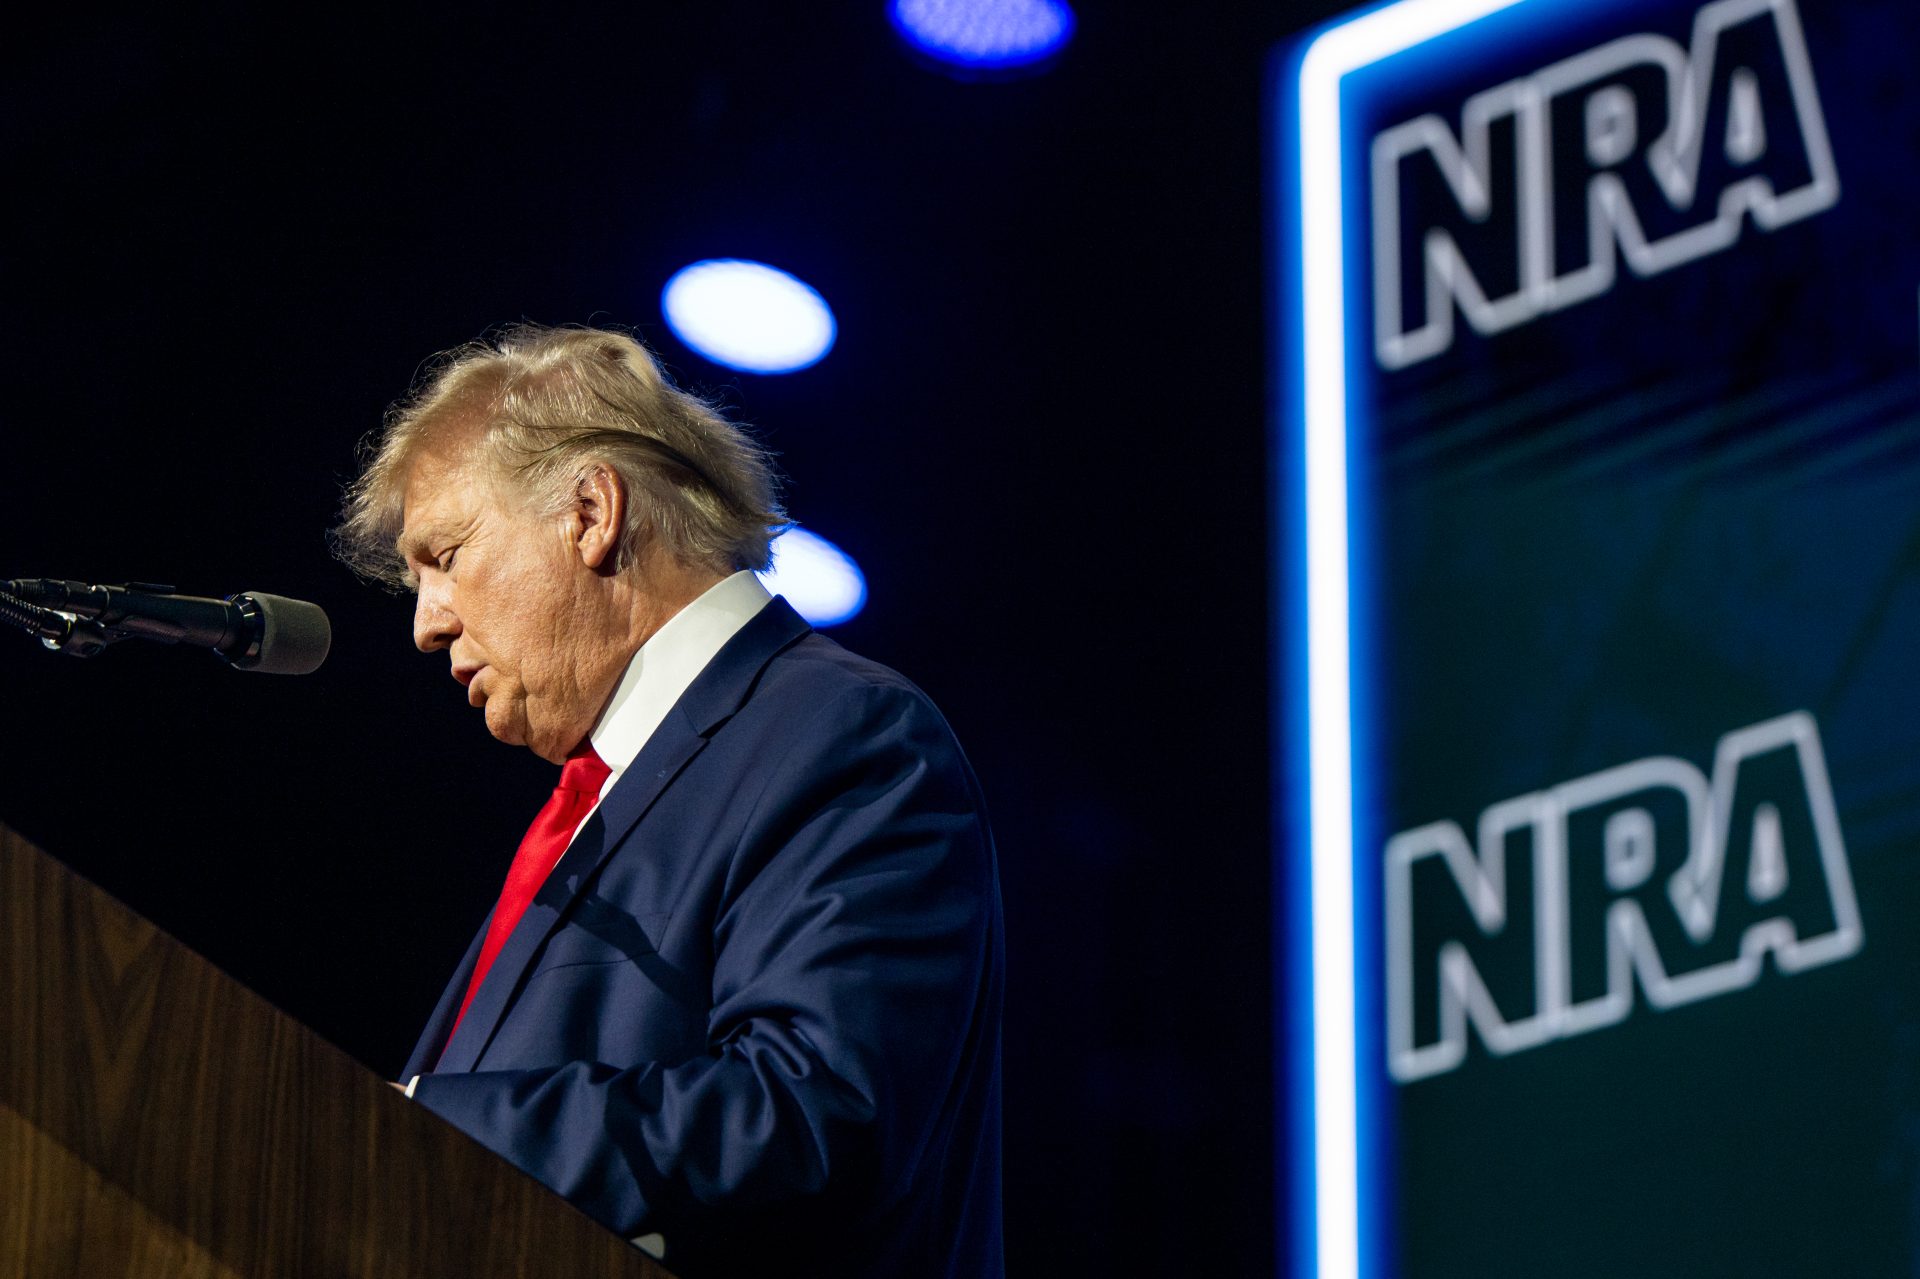 Trump Focuses On School Security & Mental Health During NRA Speech